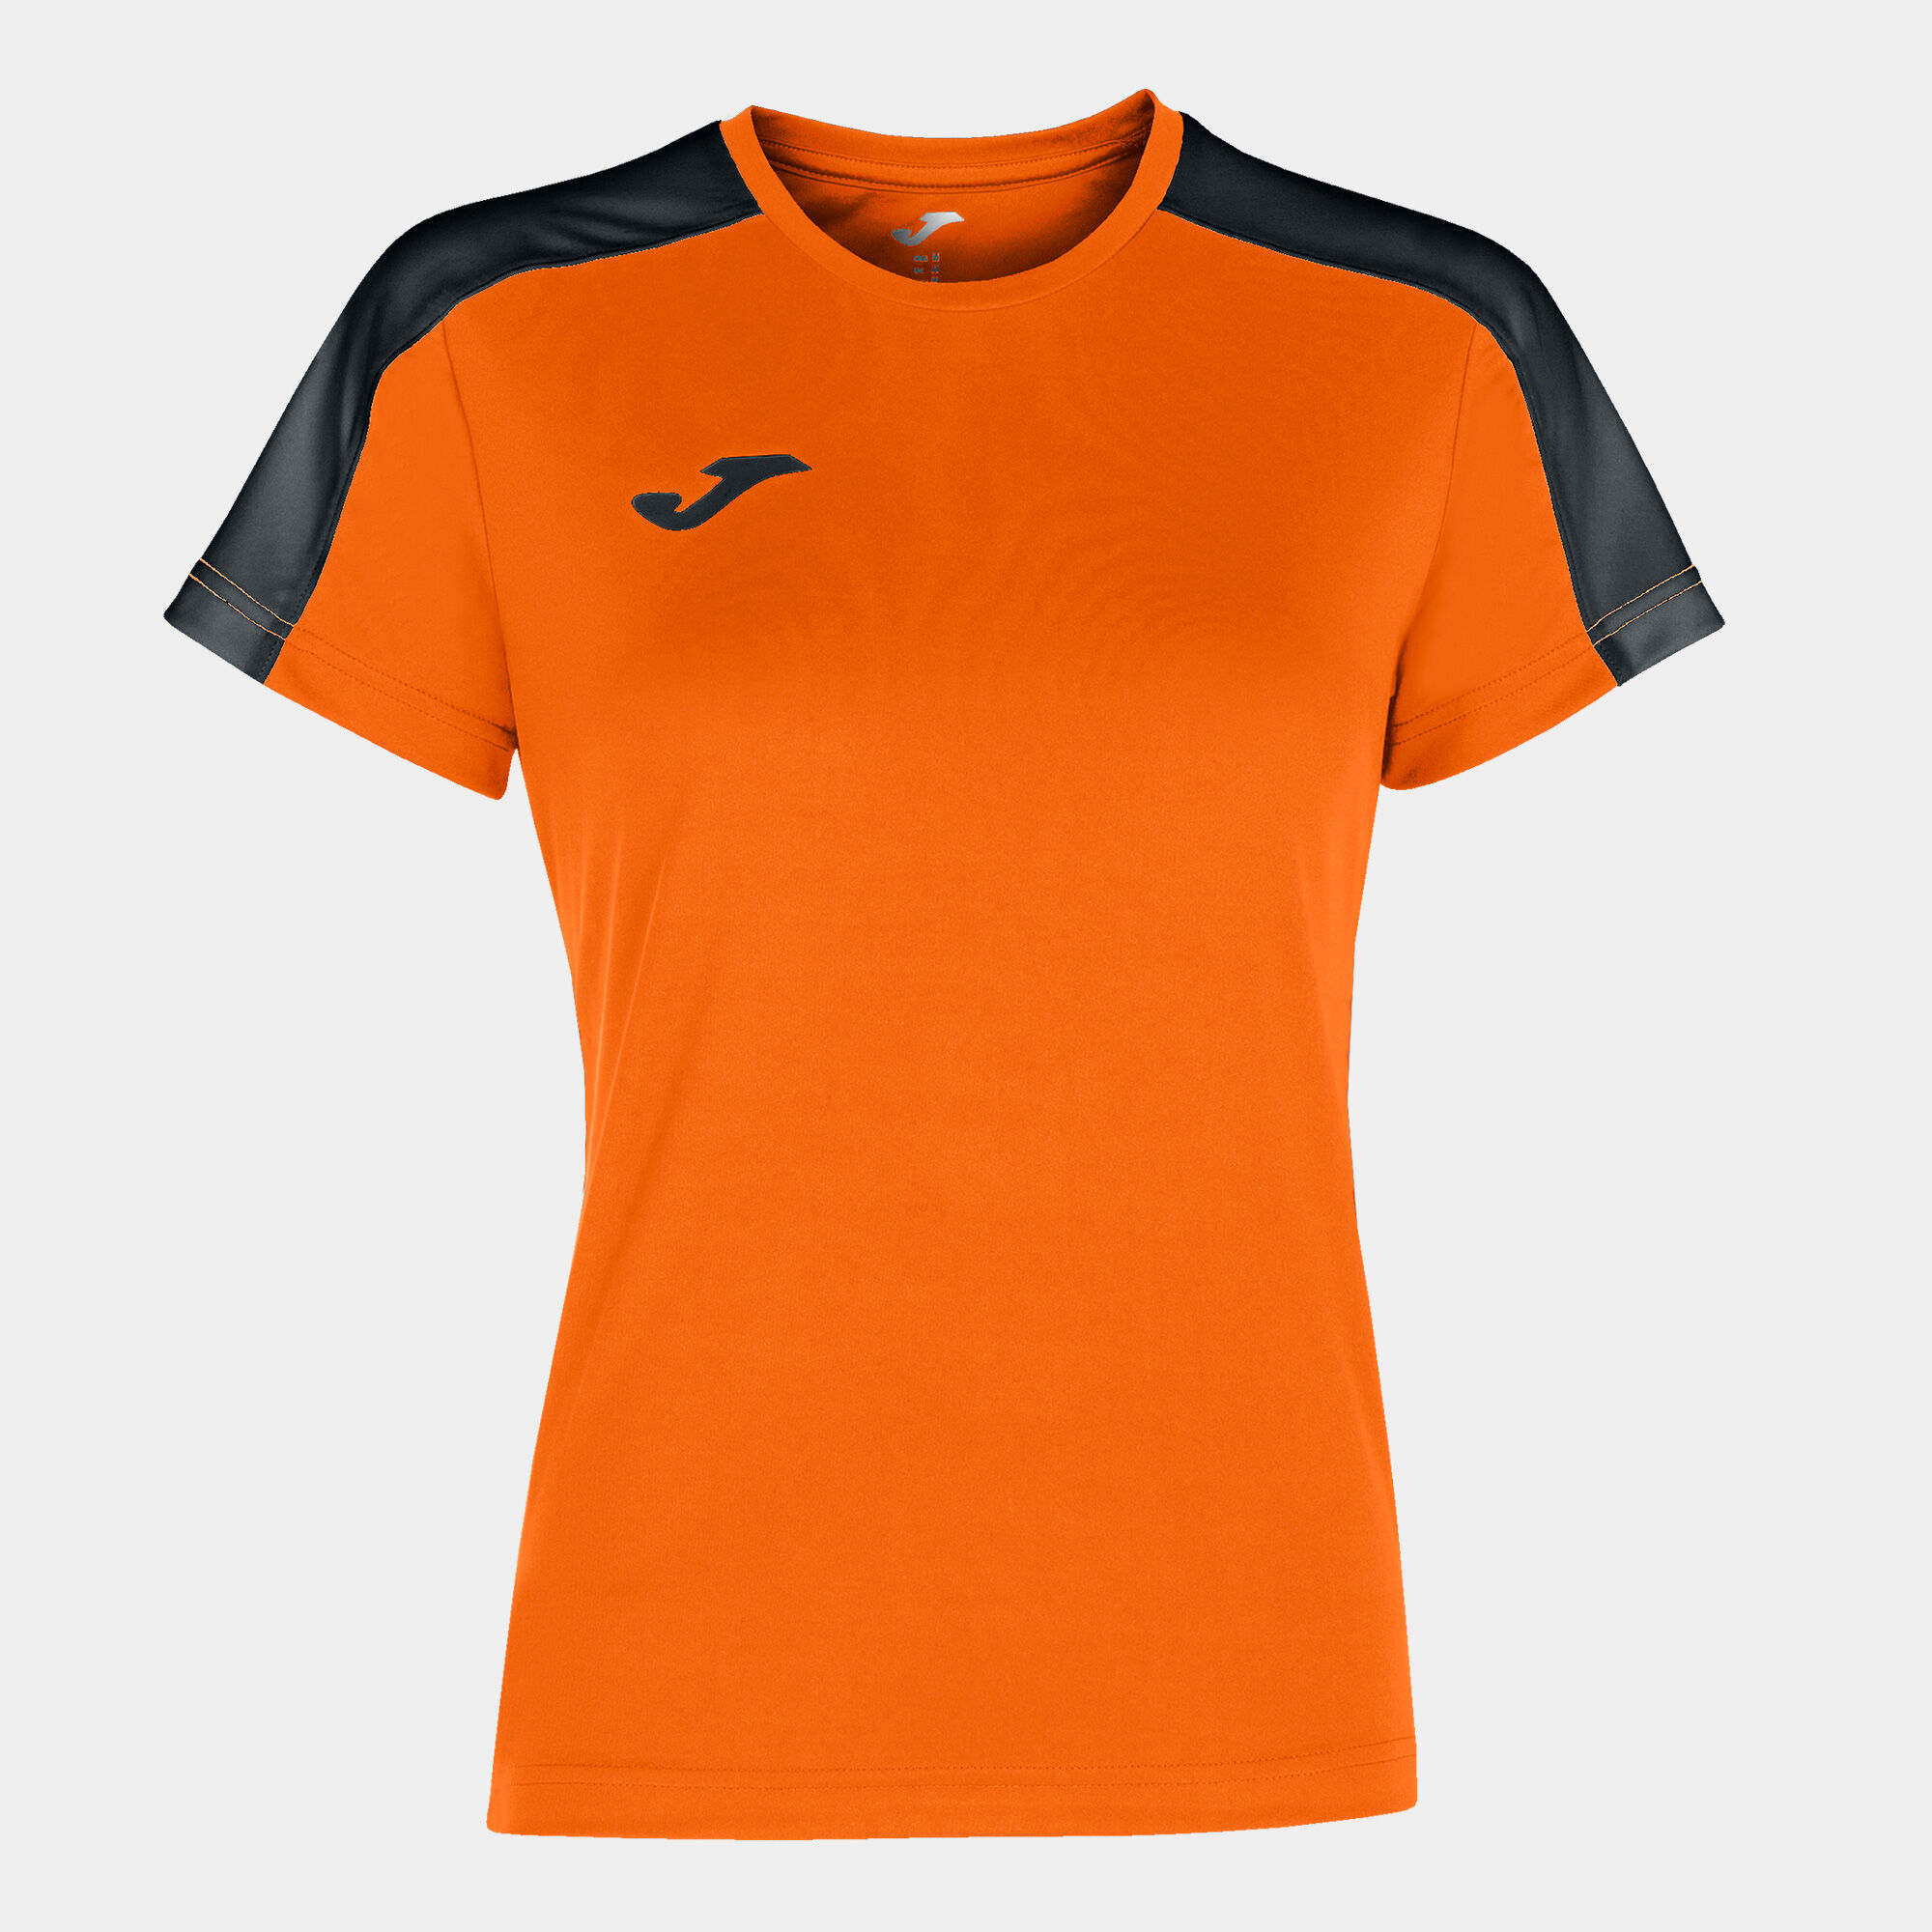 Shirt short sleeve woman Academy III orange black